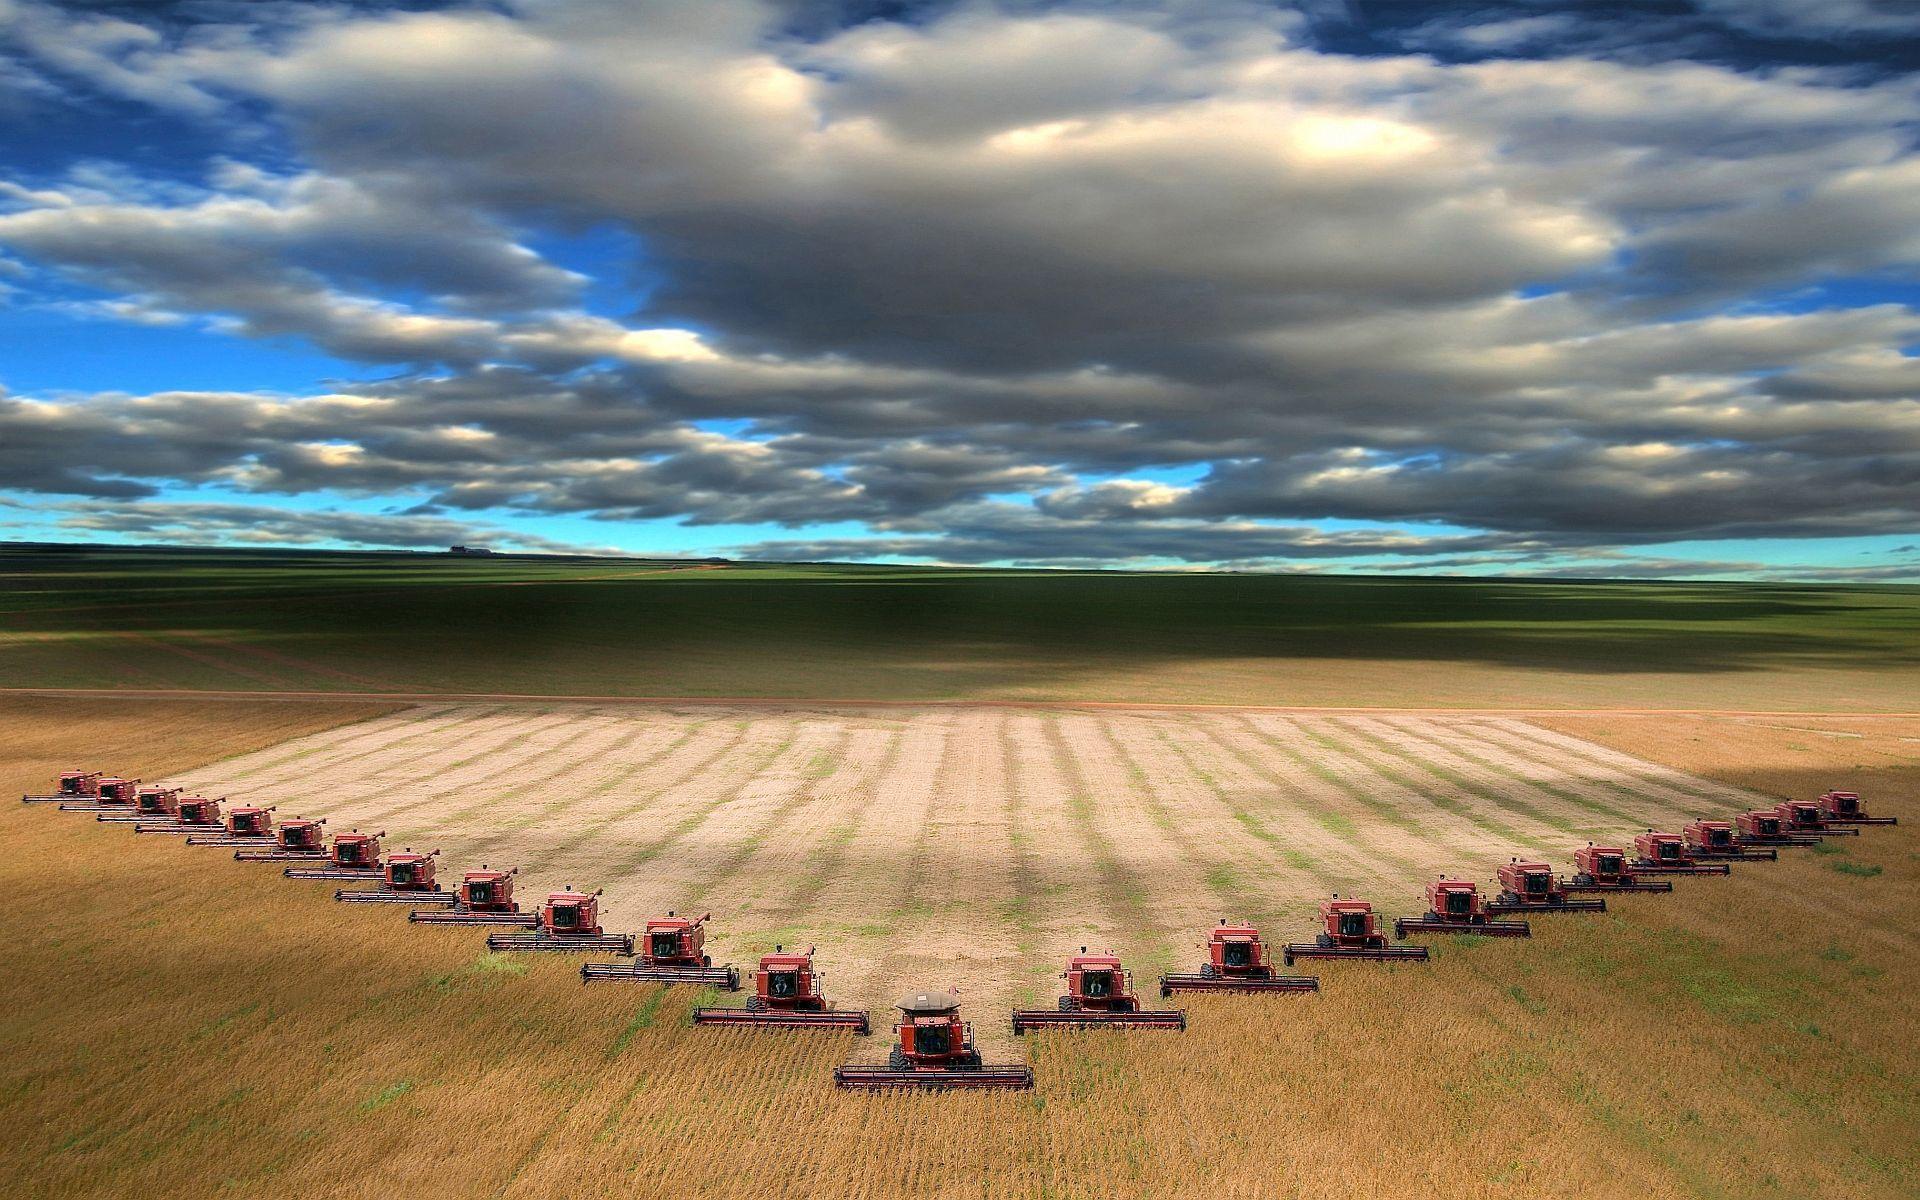 Combines harvesting wheat in I believe North Dakota